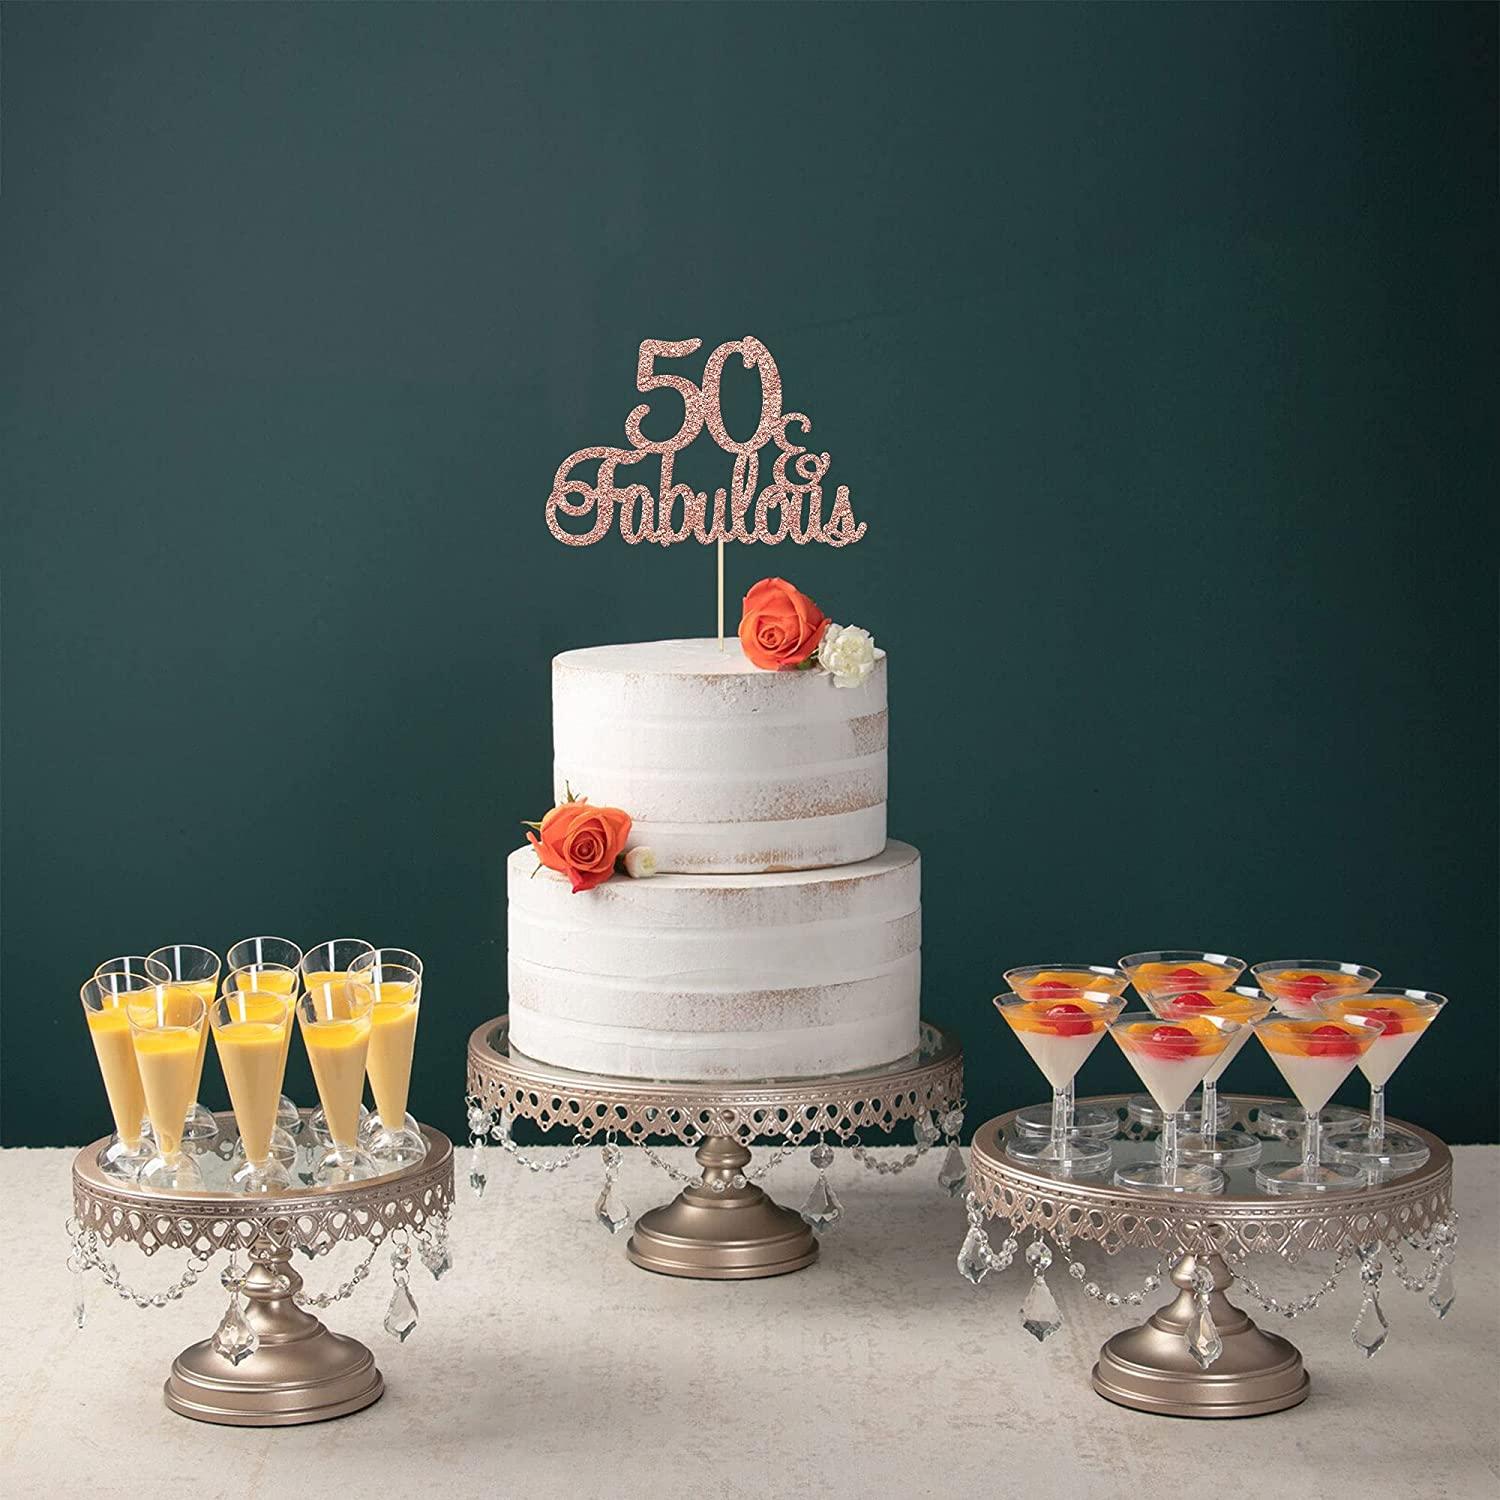 Gyufise 1Pcs 50 & Fabulous Cake Toppers Rose Gold 50 Birthday ...